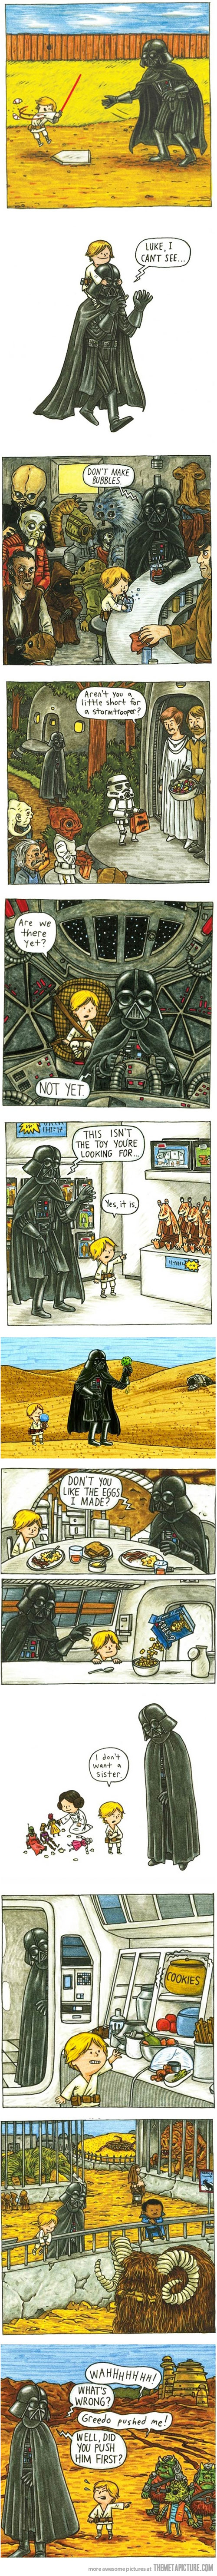 funny-Darth-Vader-Luke-good-father.jpg